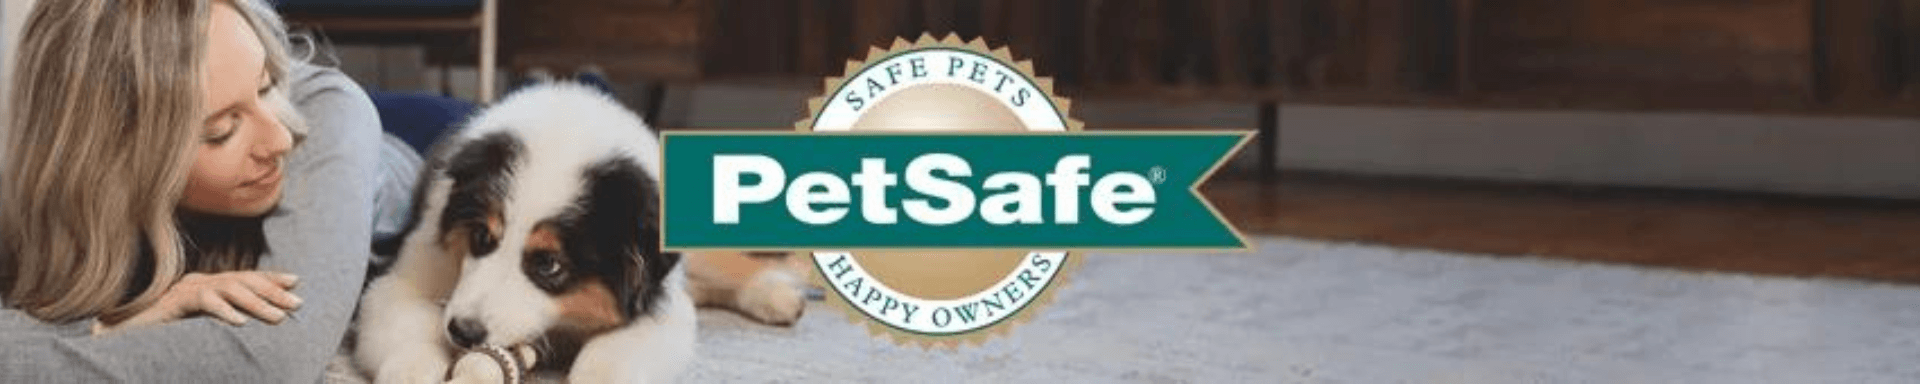 PetSafe - The Pets Club